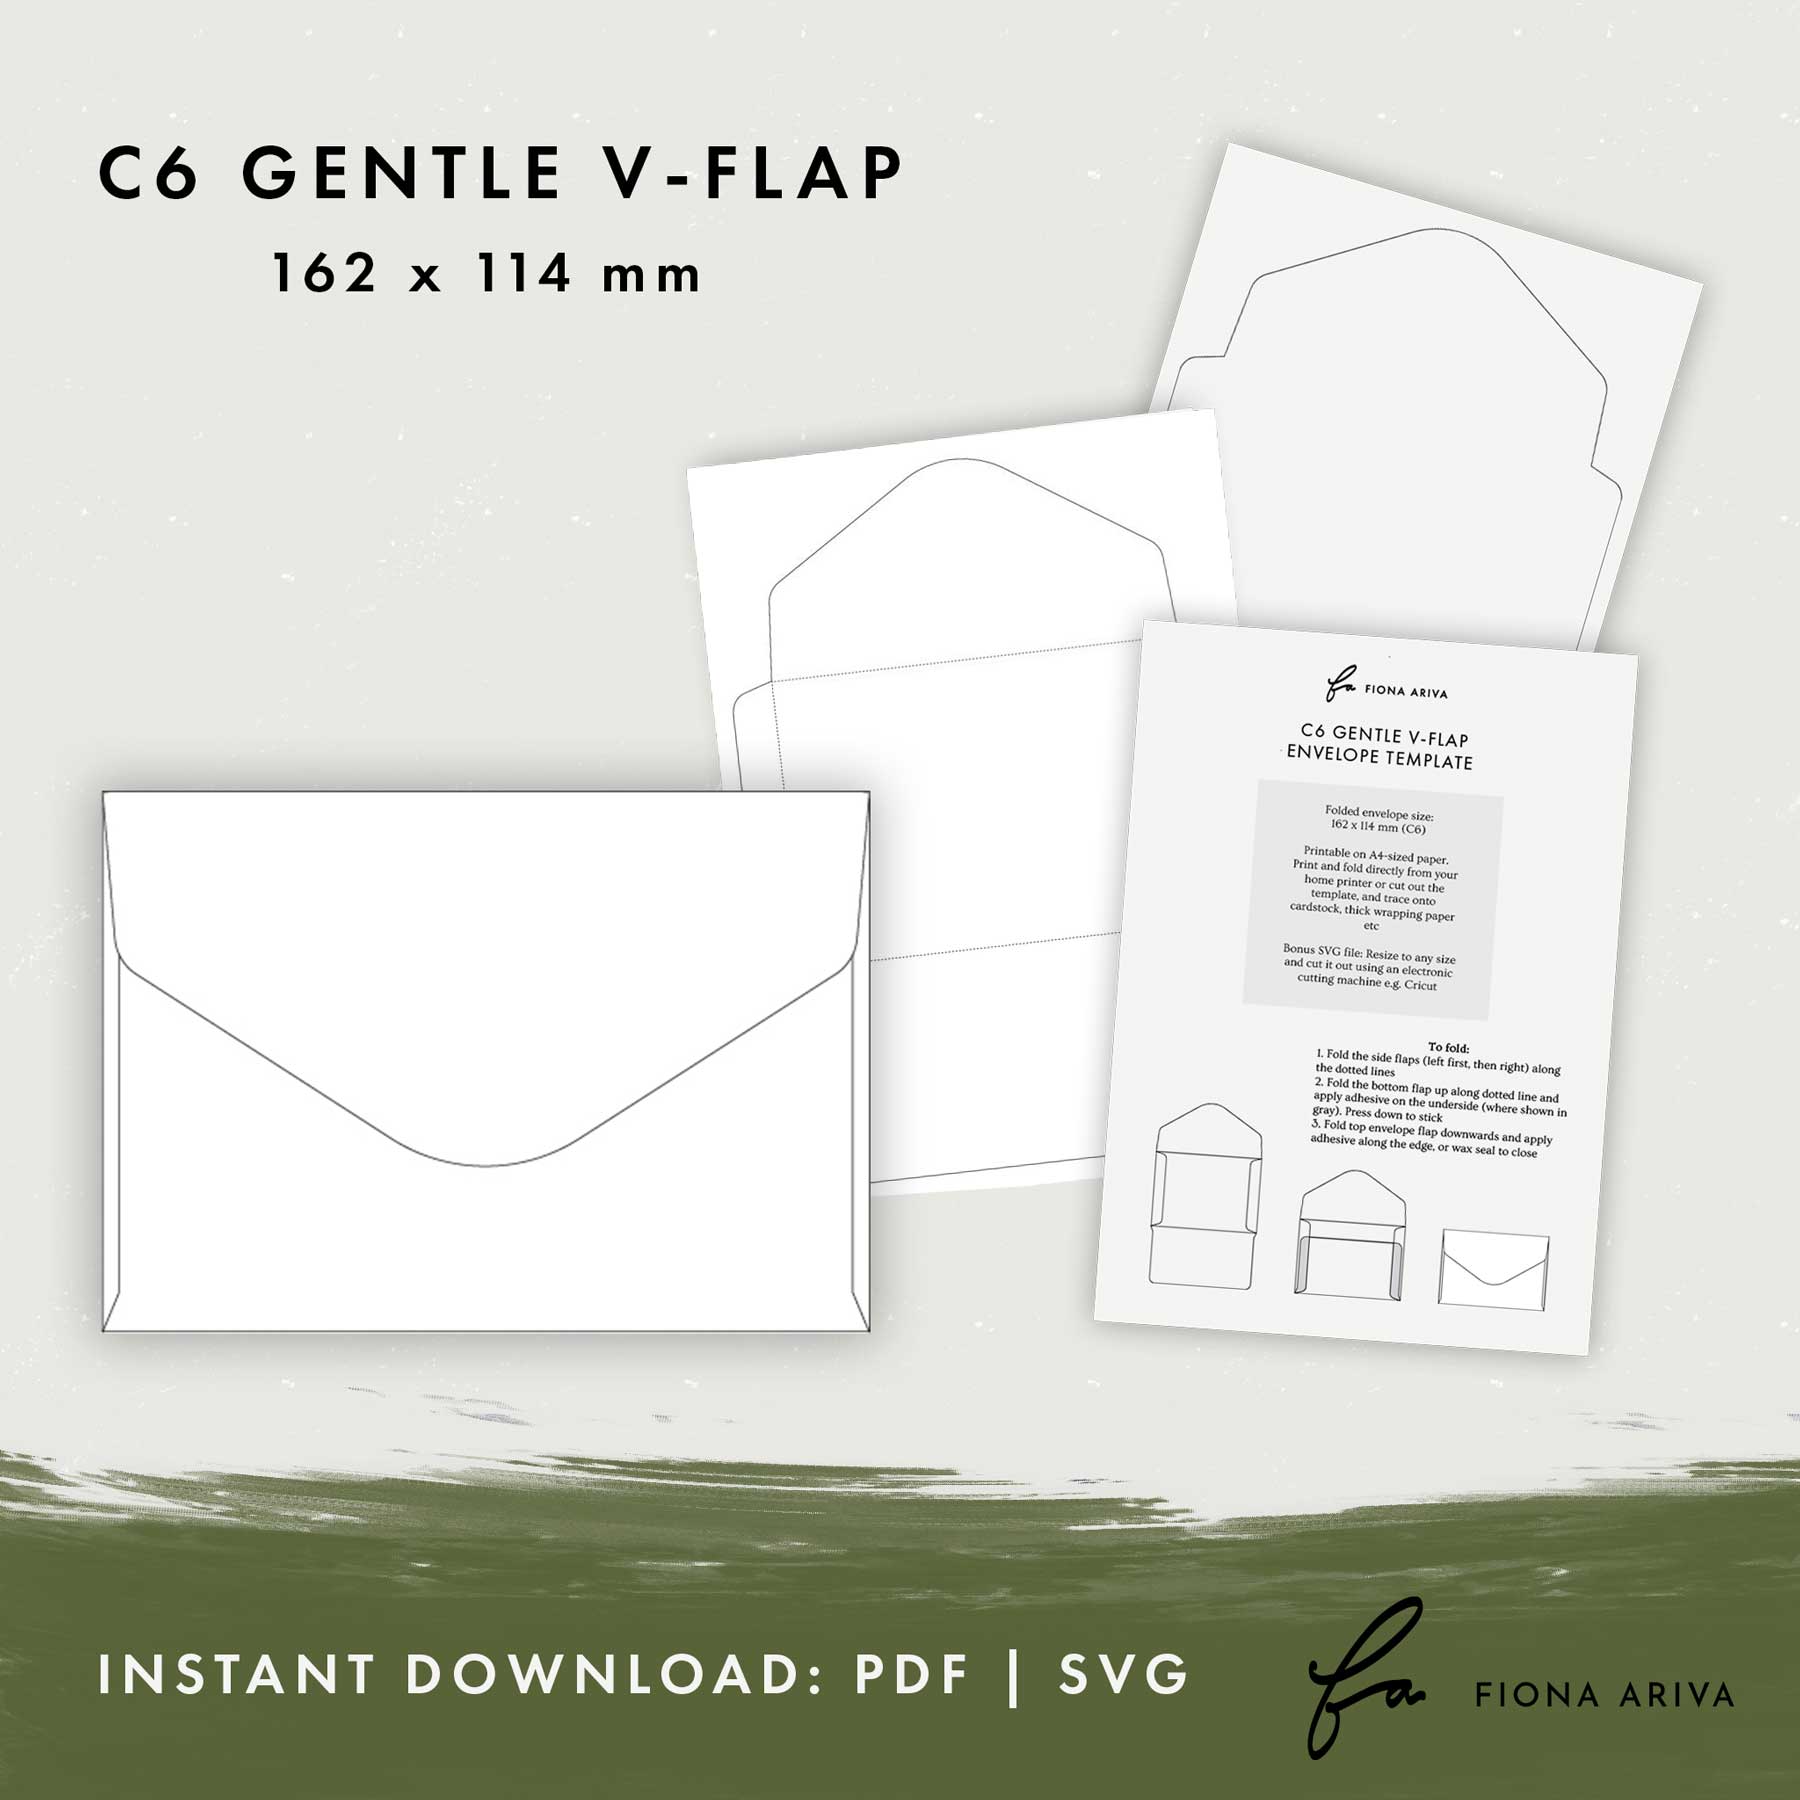 Gentle V-flap Downloadable Envelope Template C6 162 x 114mm